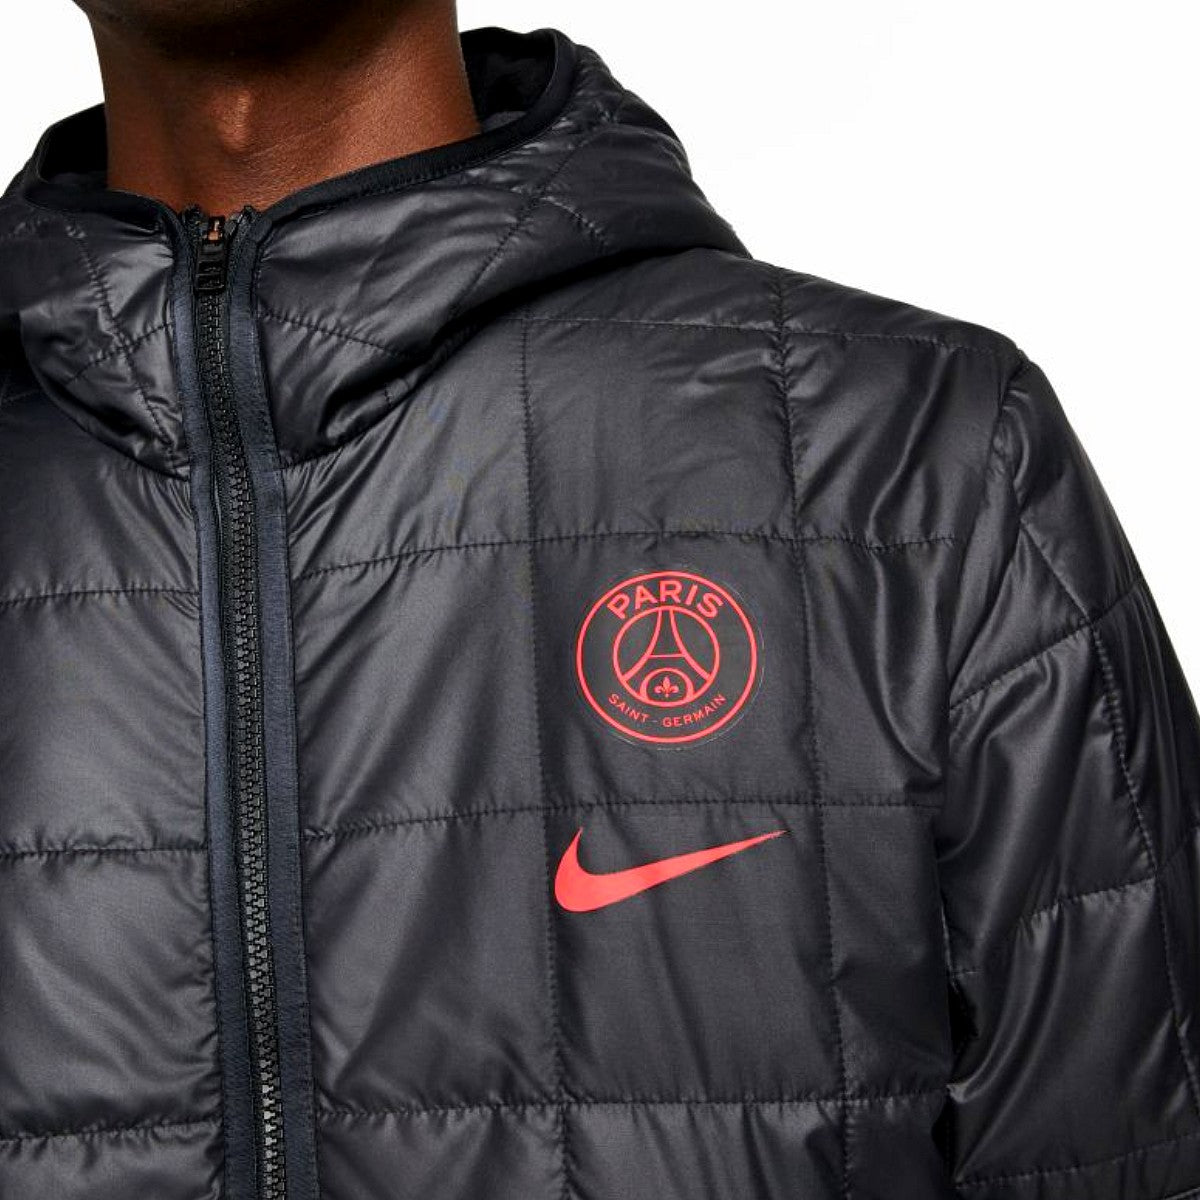 Paris Germain bomber jacket 2021/22 - Nike – SoccerTracksuits.com